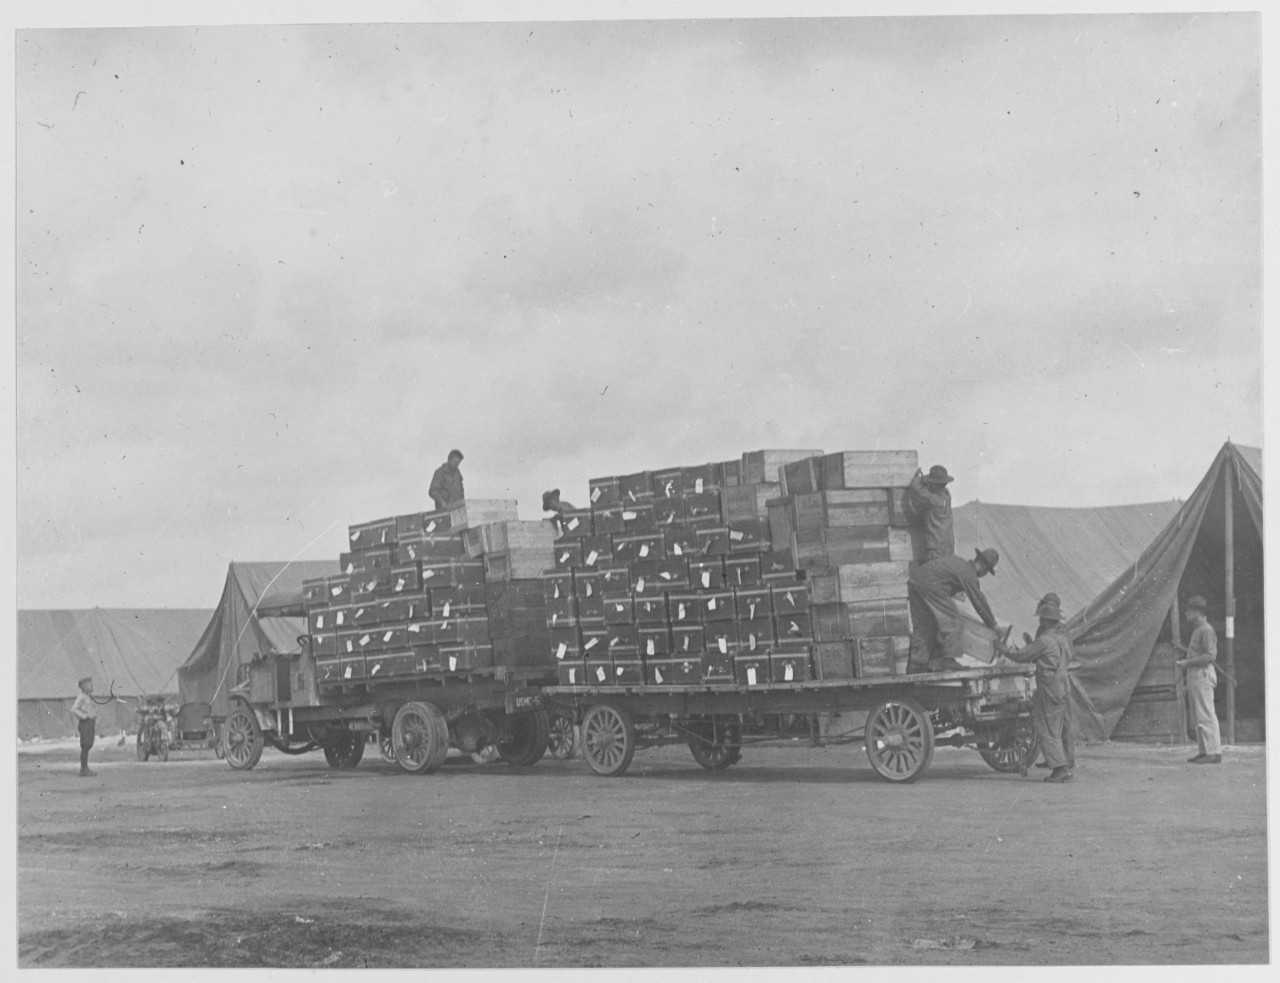 Unloading Q.M. supplies, U.S. Marine Flying Field, Miami, Florida